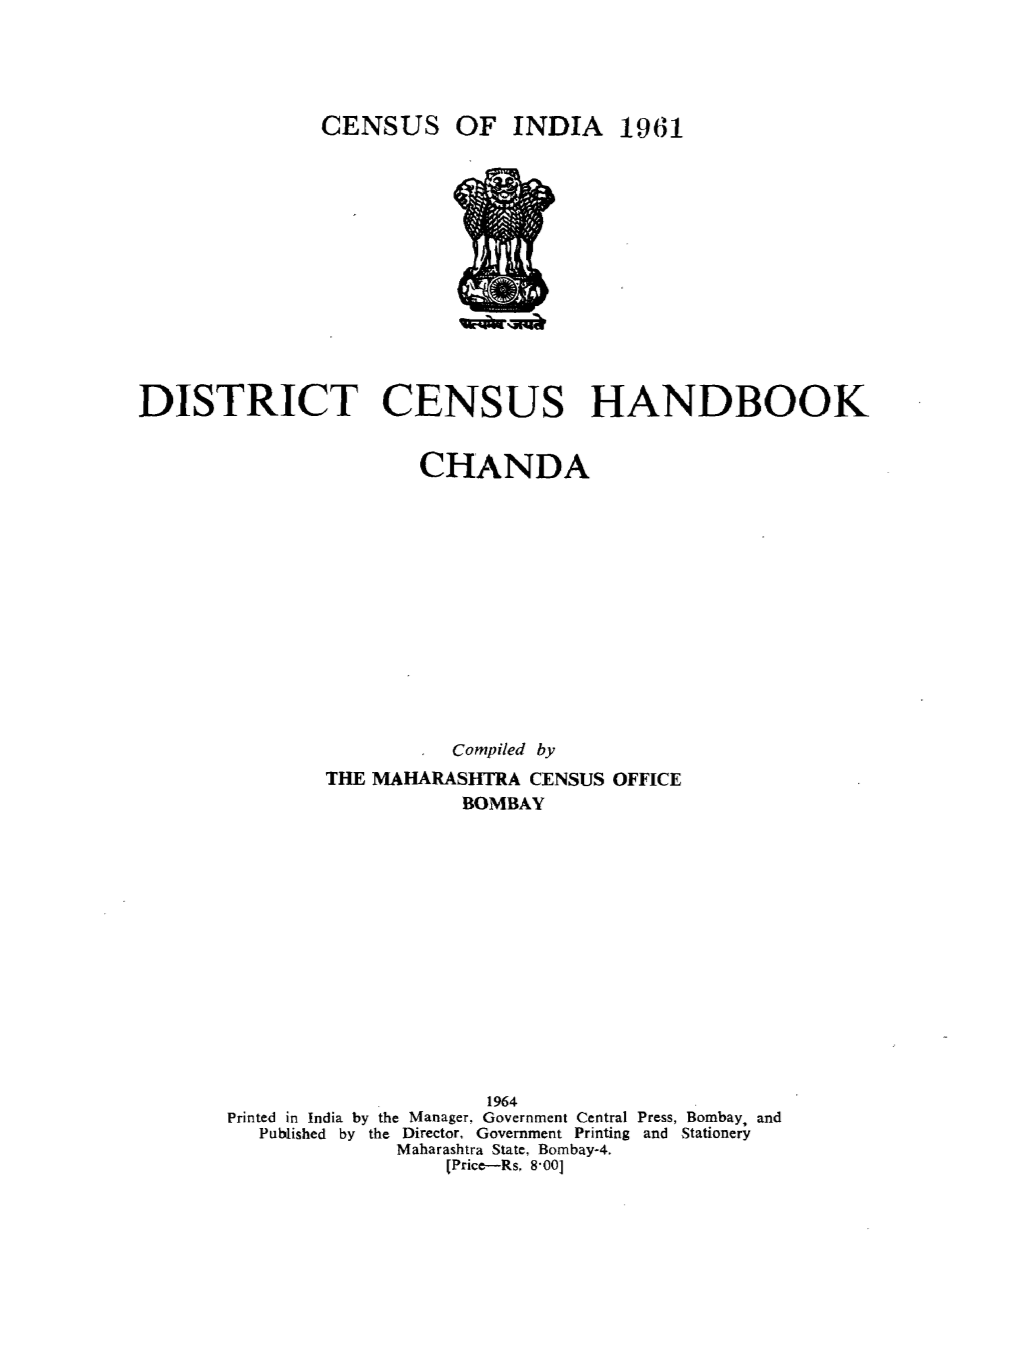 District Census Handbook, Chanda